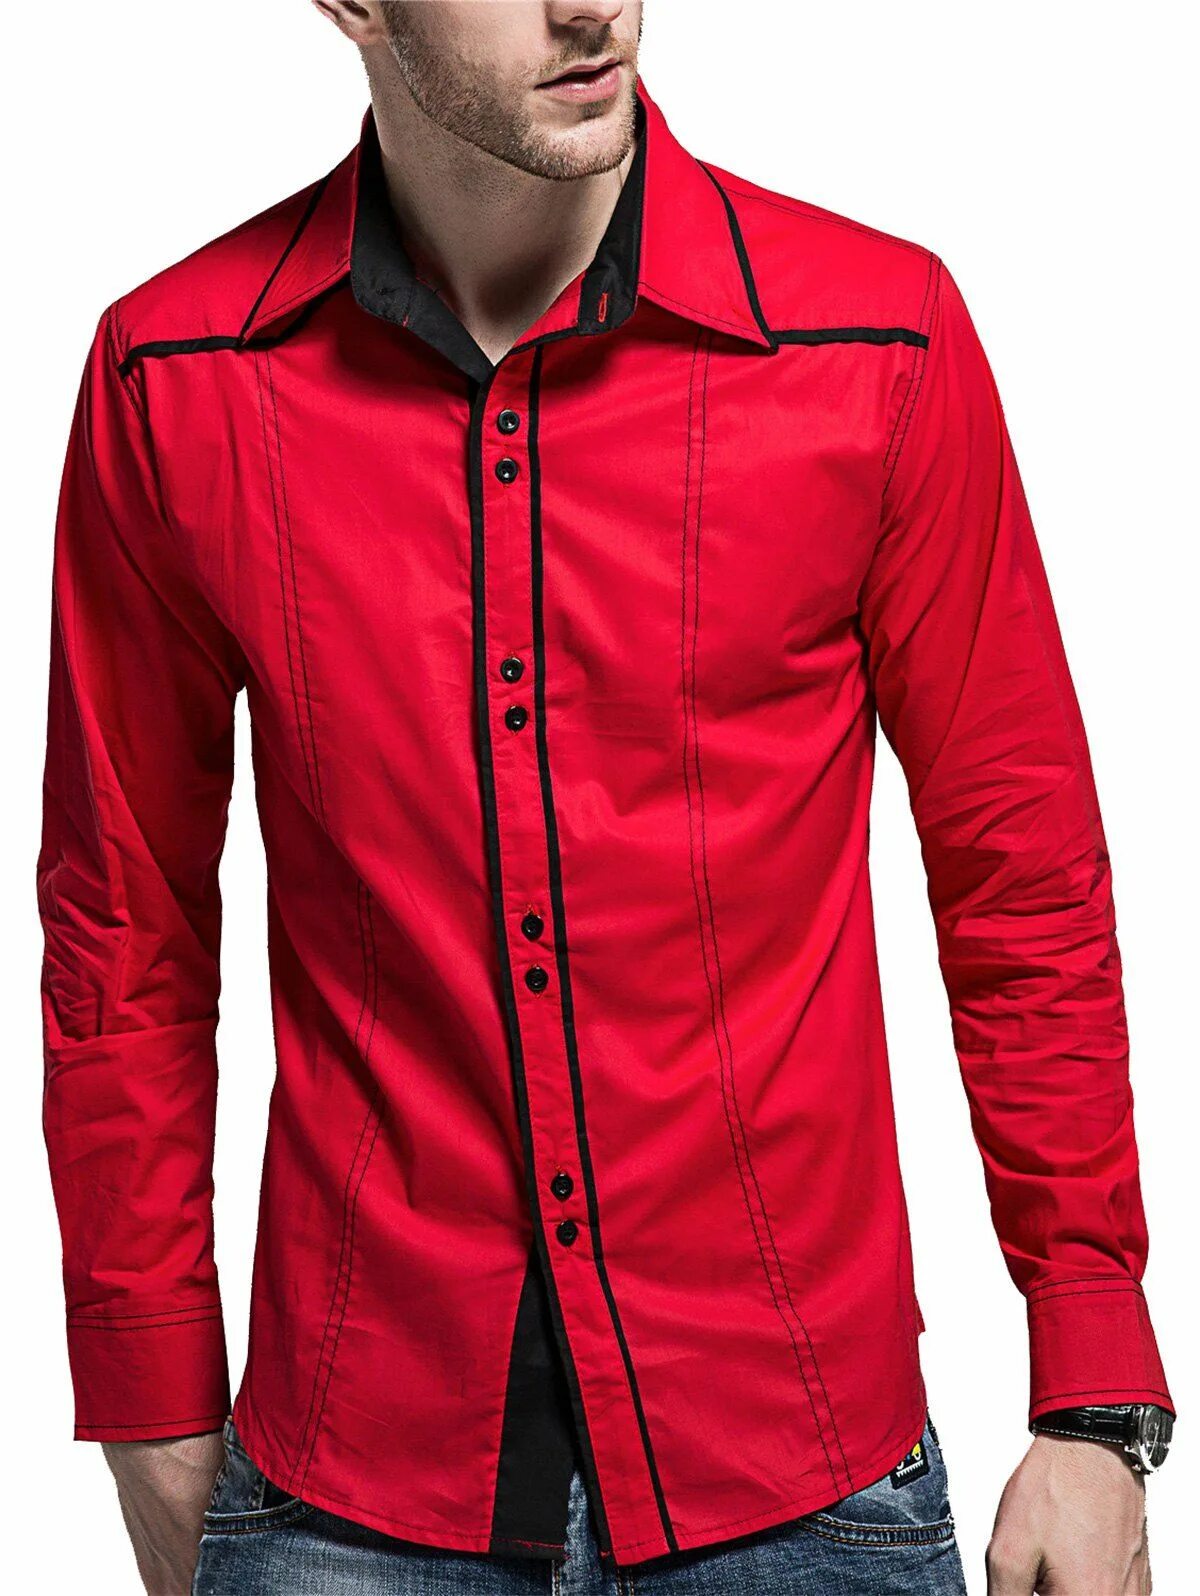 Красная рубашка. Красная сорочка мужская. Мужская рубашка красного цвета. Рубашка мужская с длинным рукавом красная. Красная рубашка текст